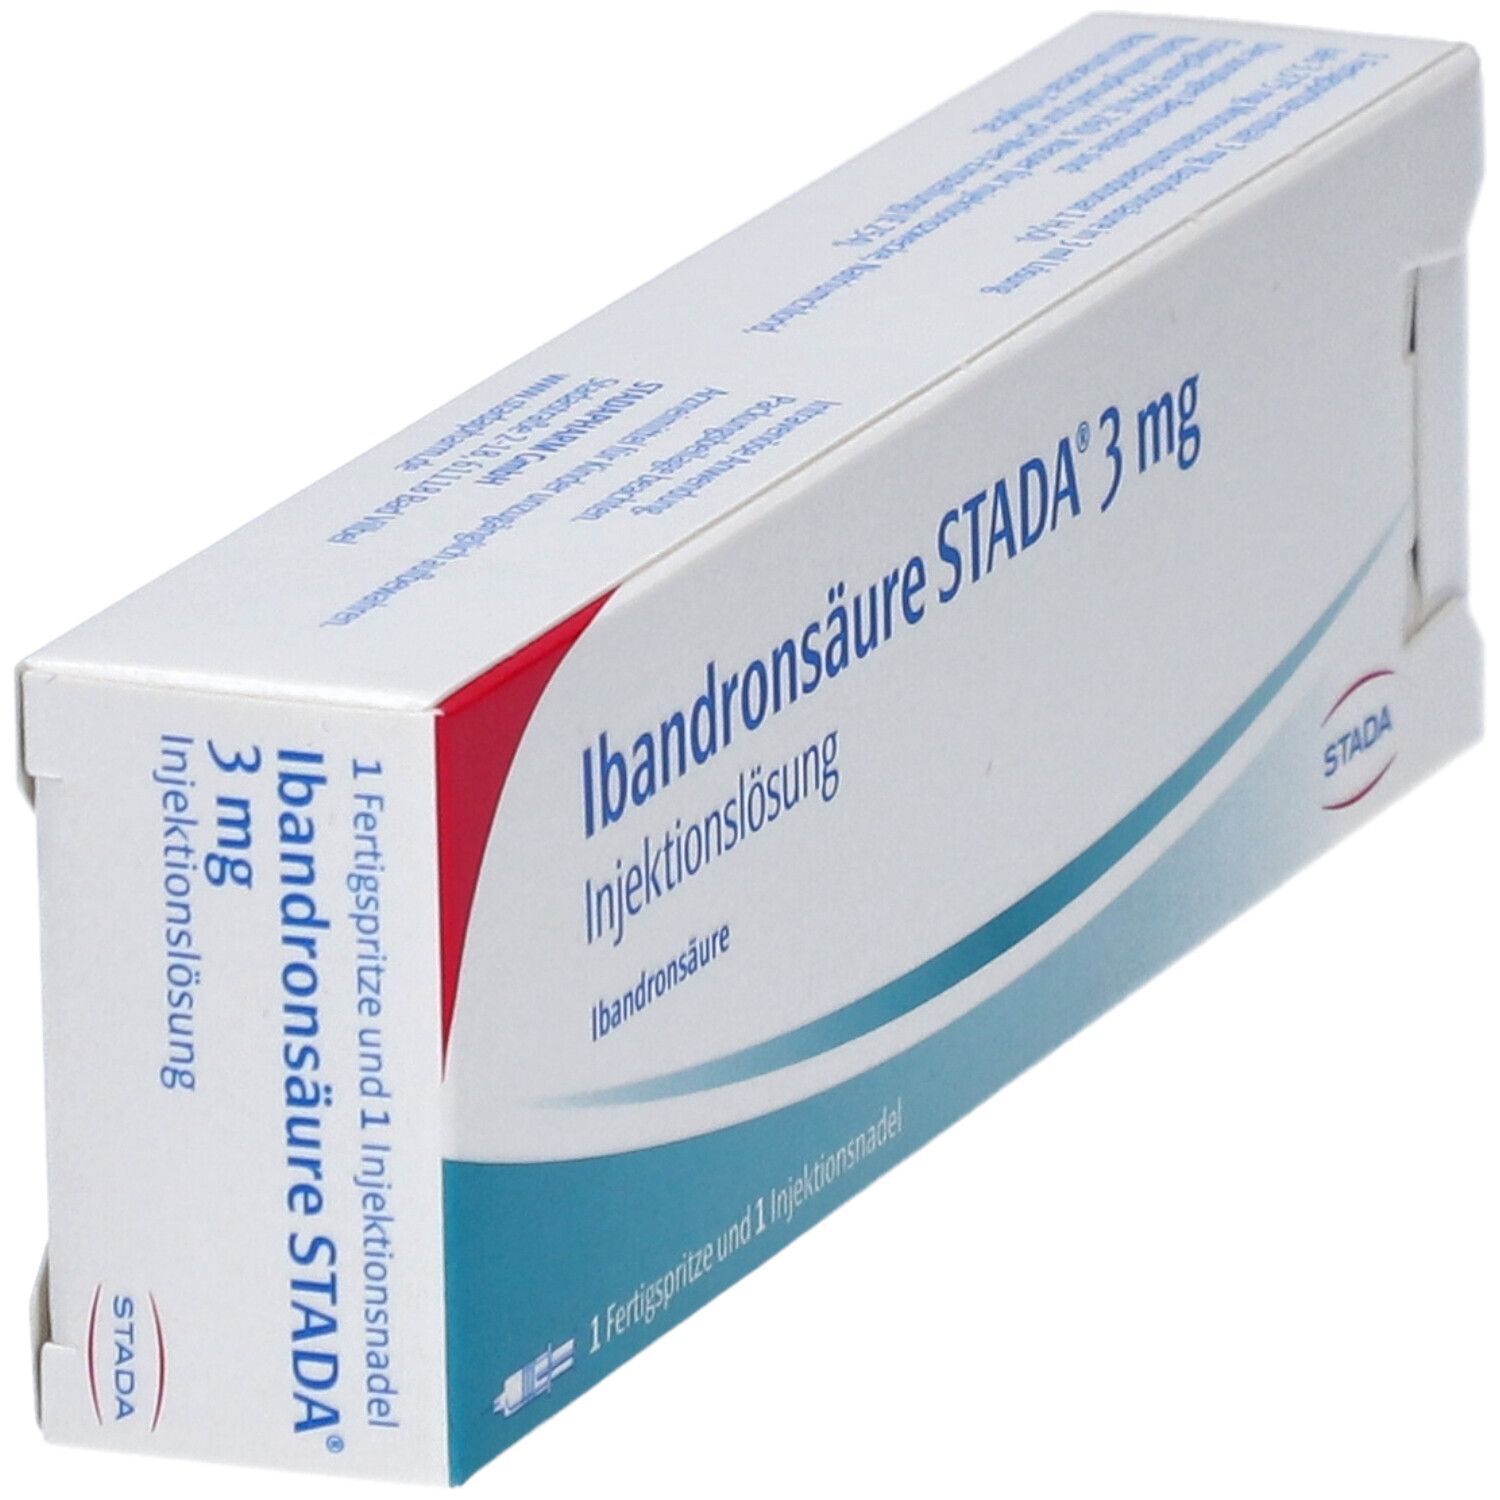 Ibandronsäure STADA® 3 mg